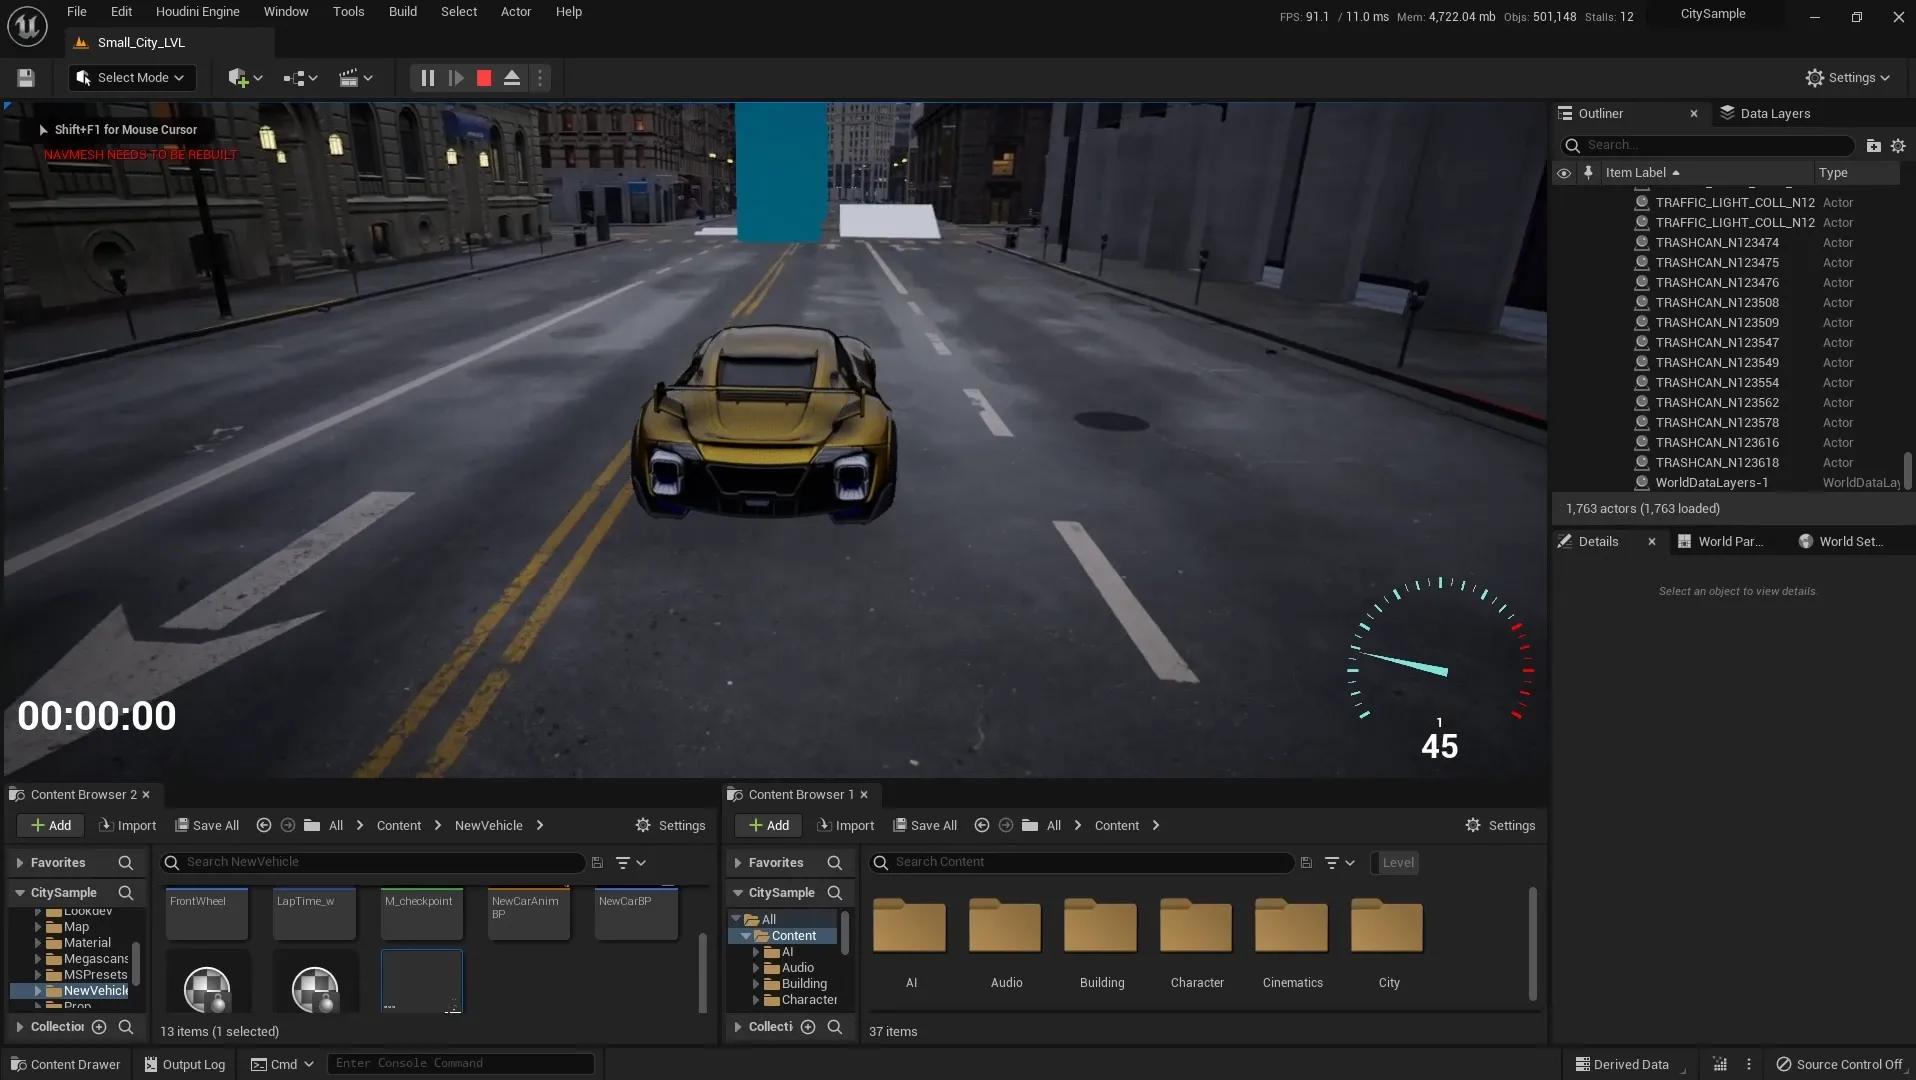 Unreal Engine 5 - Make AAA Game Vehicles